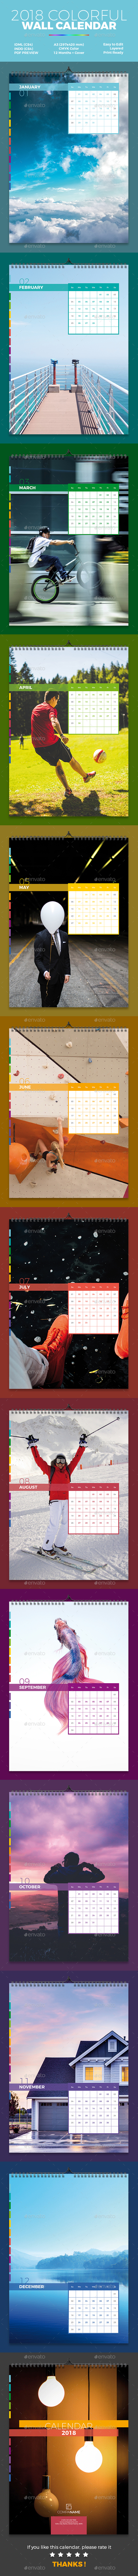 GraphicRiver 2018 Colorful Wall Calendar 20649599